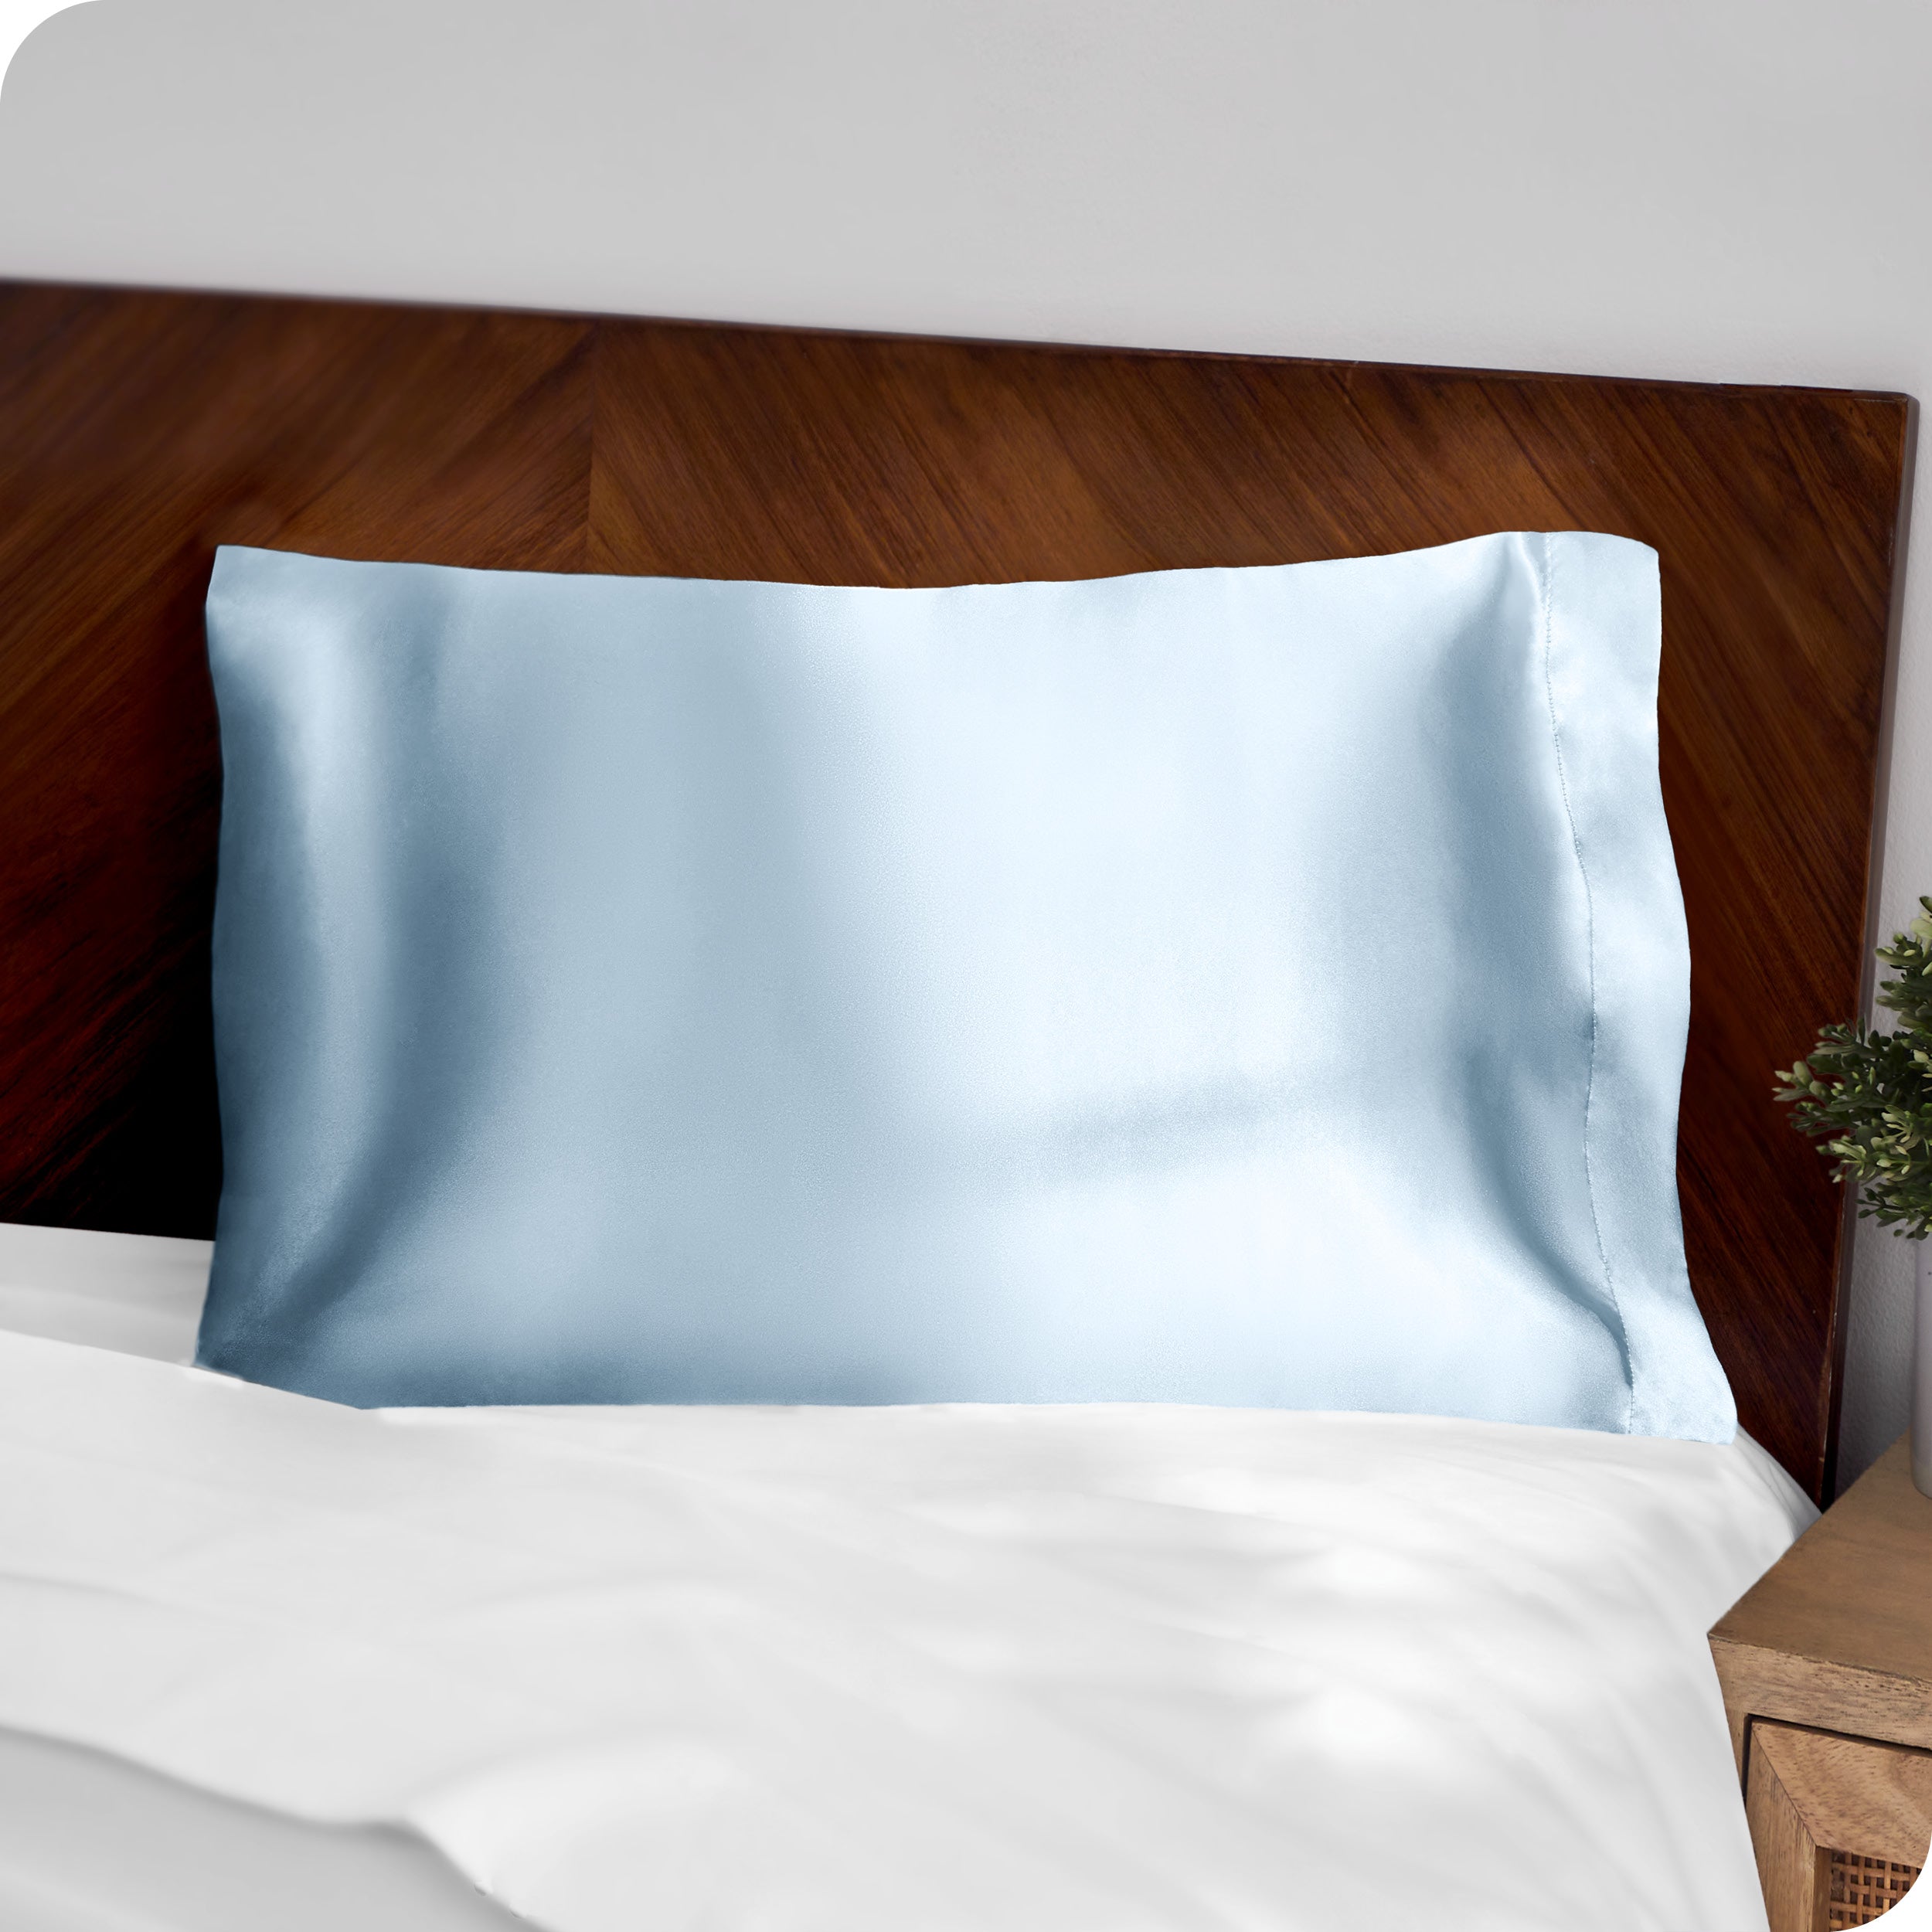 A blue silk pillowcase on a pillow resting on a headboard